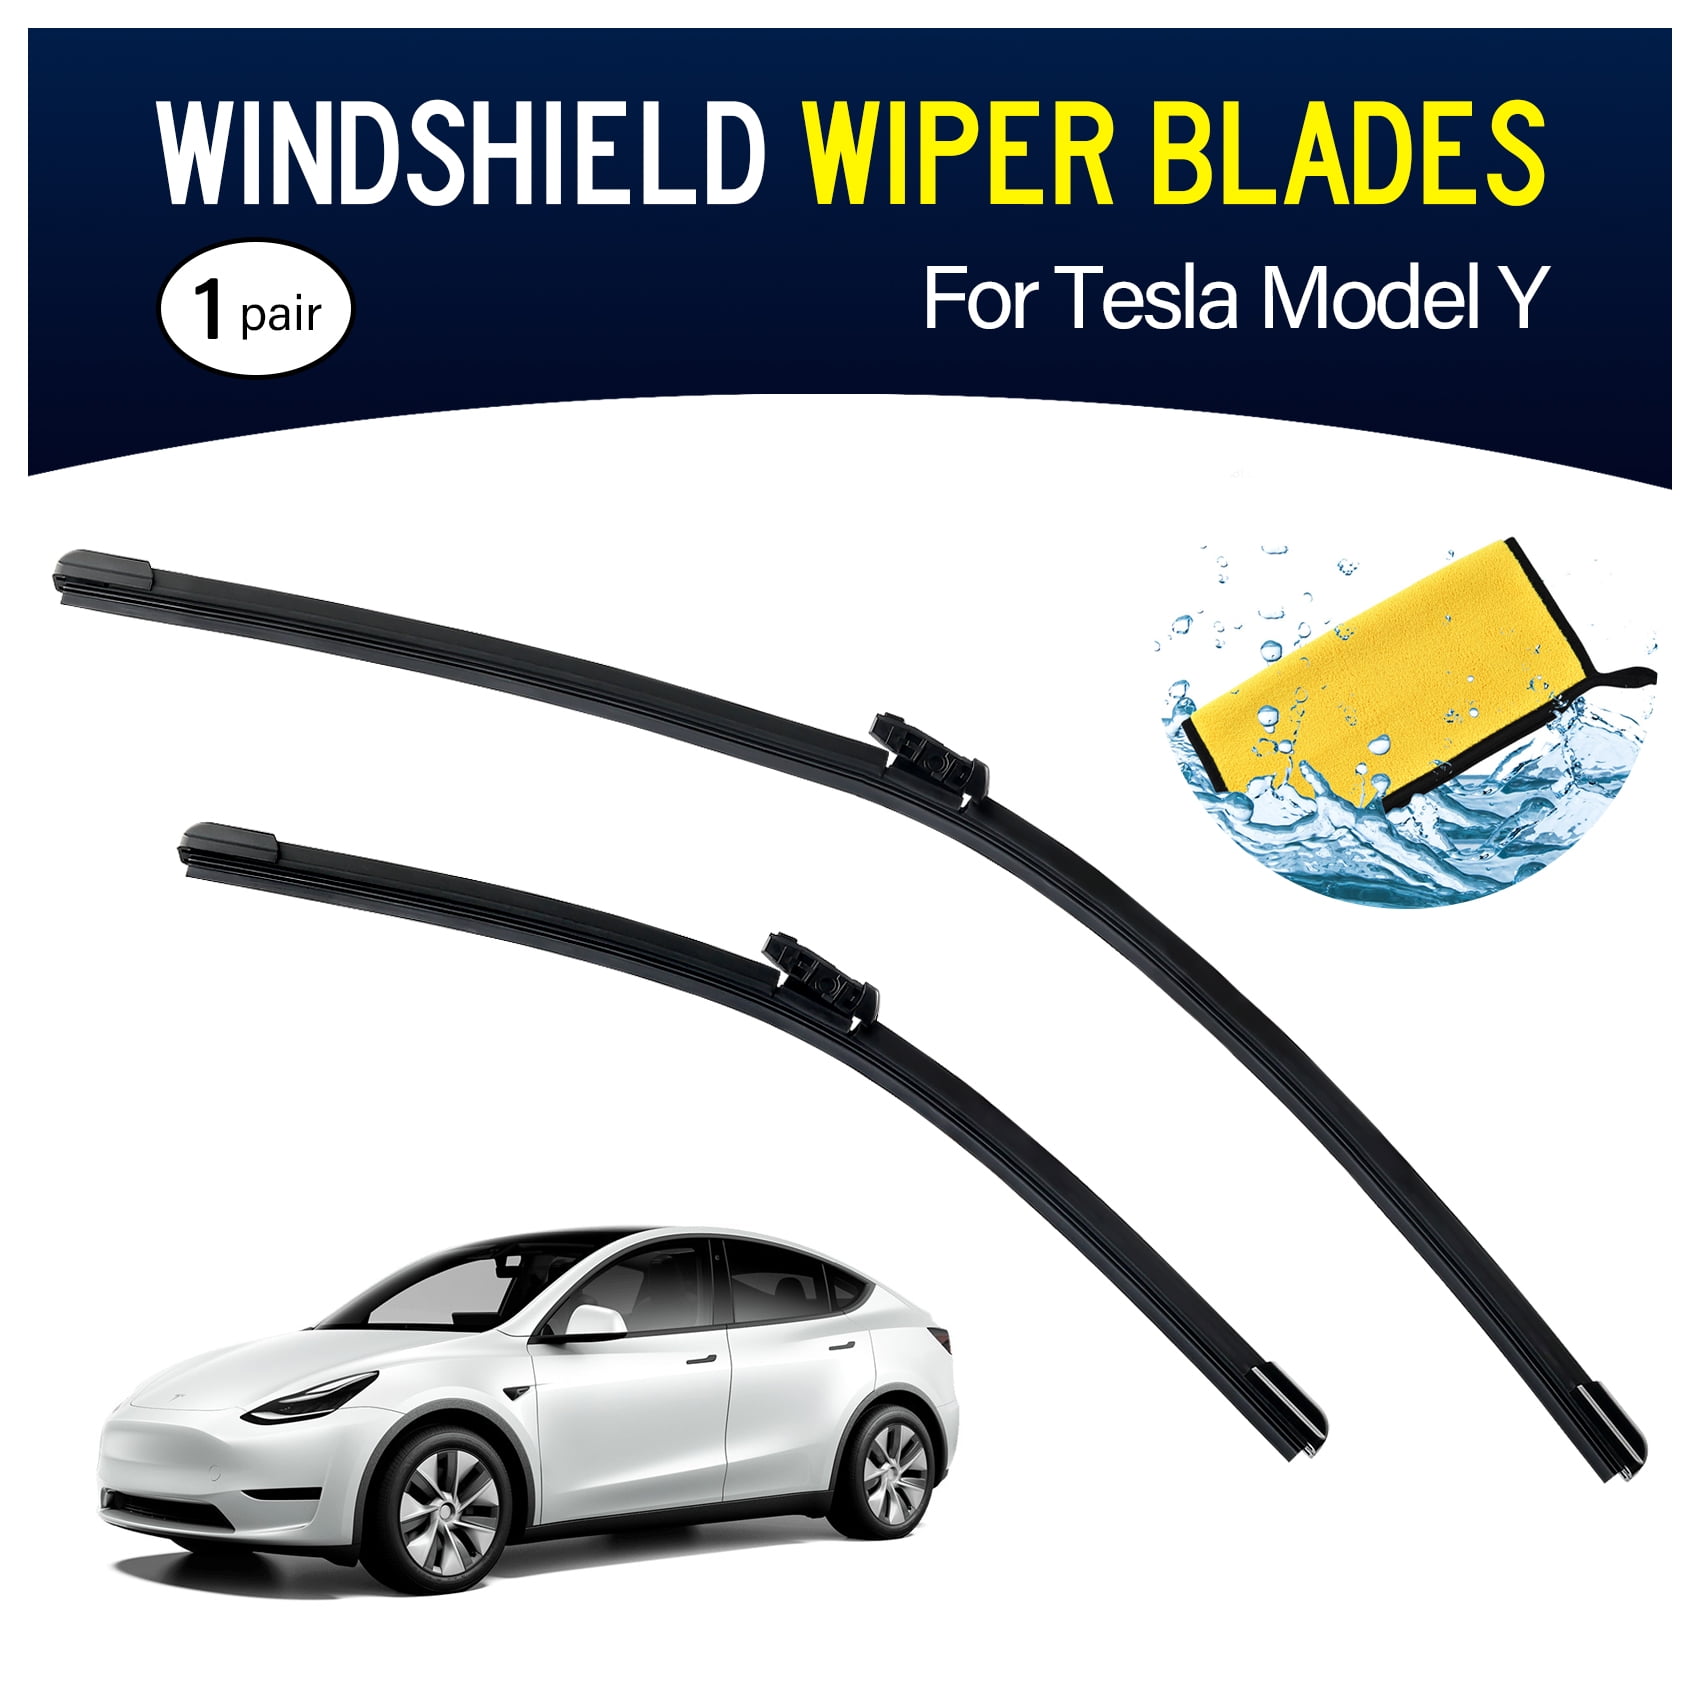 Windshield Wiper Blades for Tesla Model Y, 1 Pair 